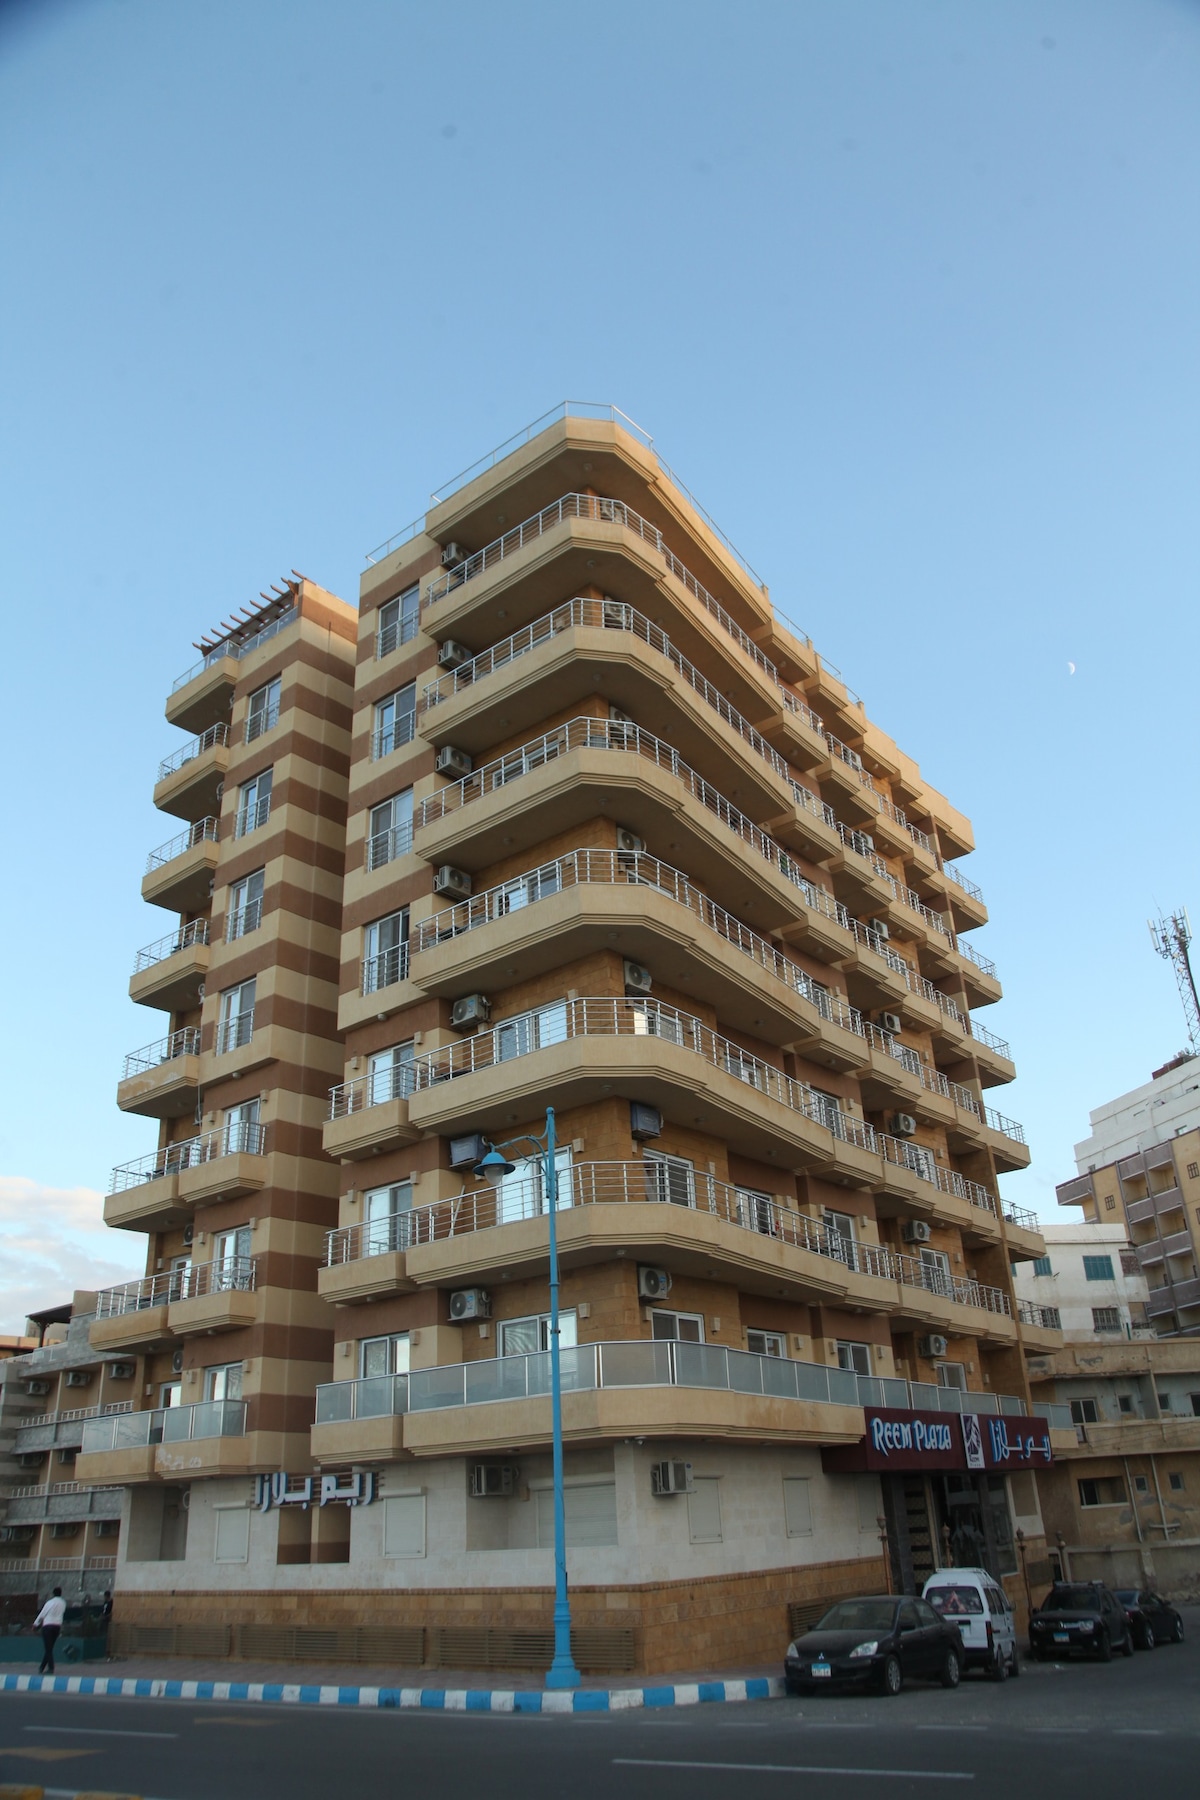 Marsa matrouh-令人惊叹的公寓- reem广场